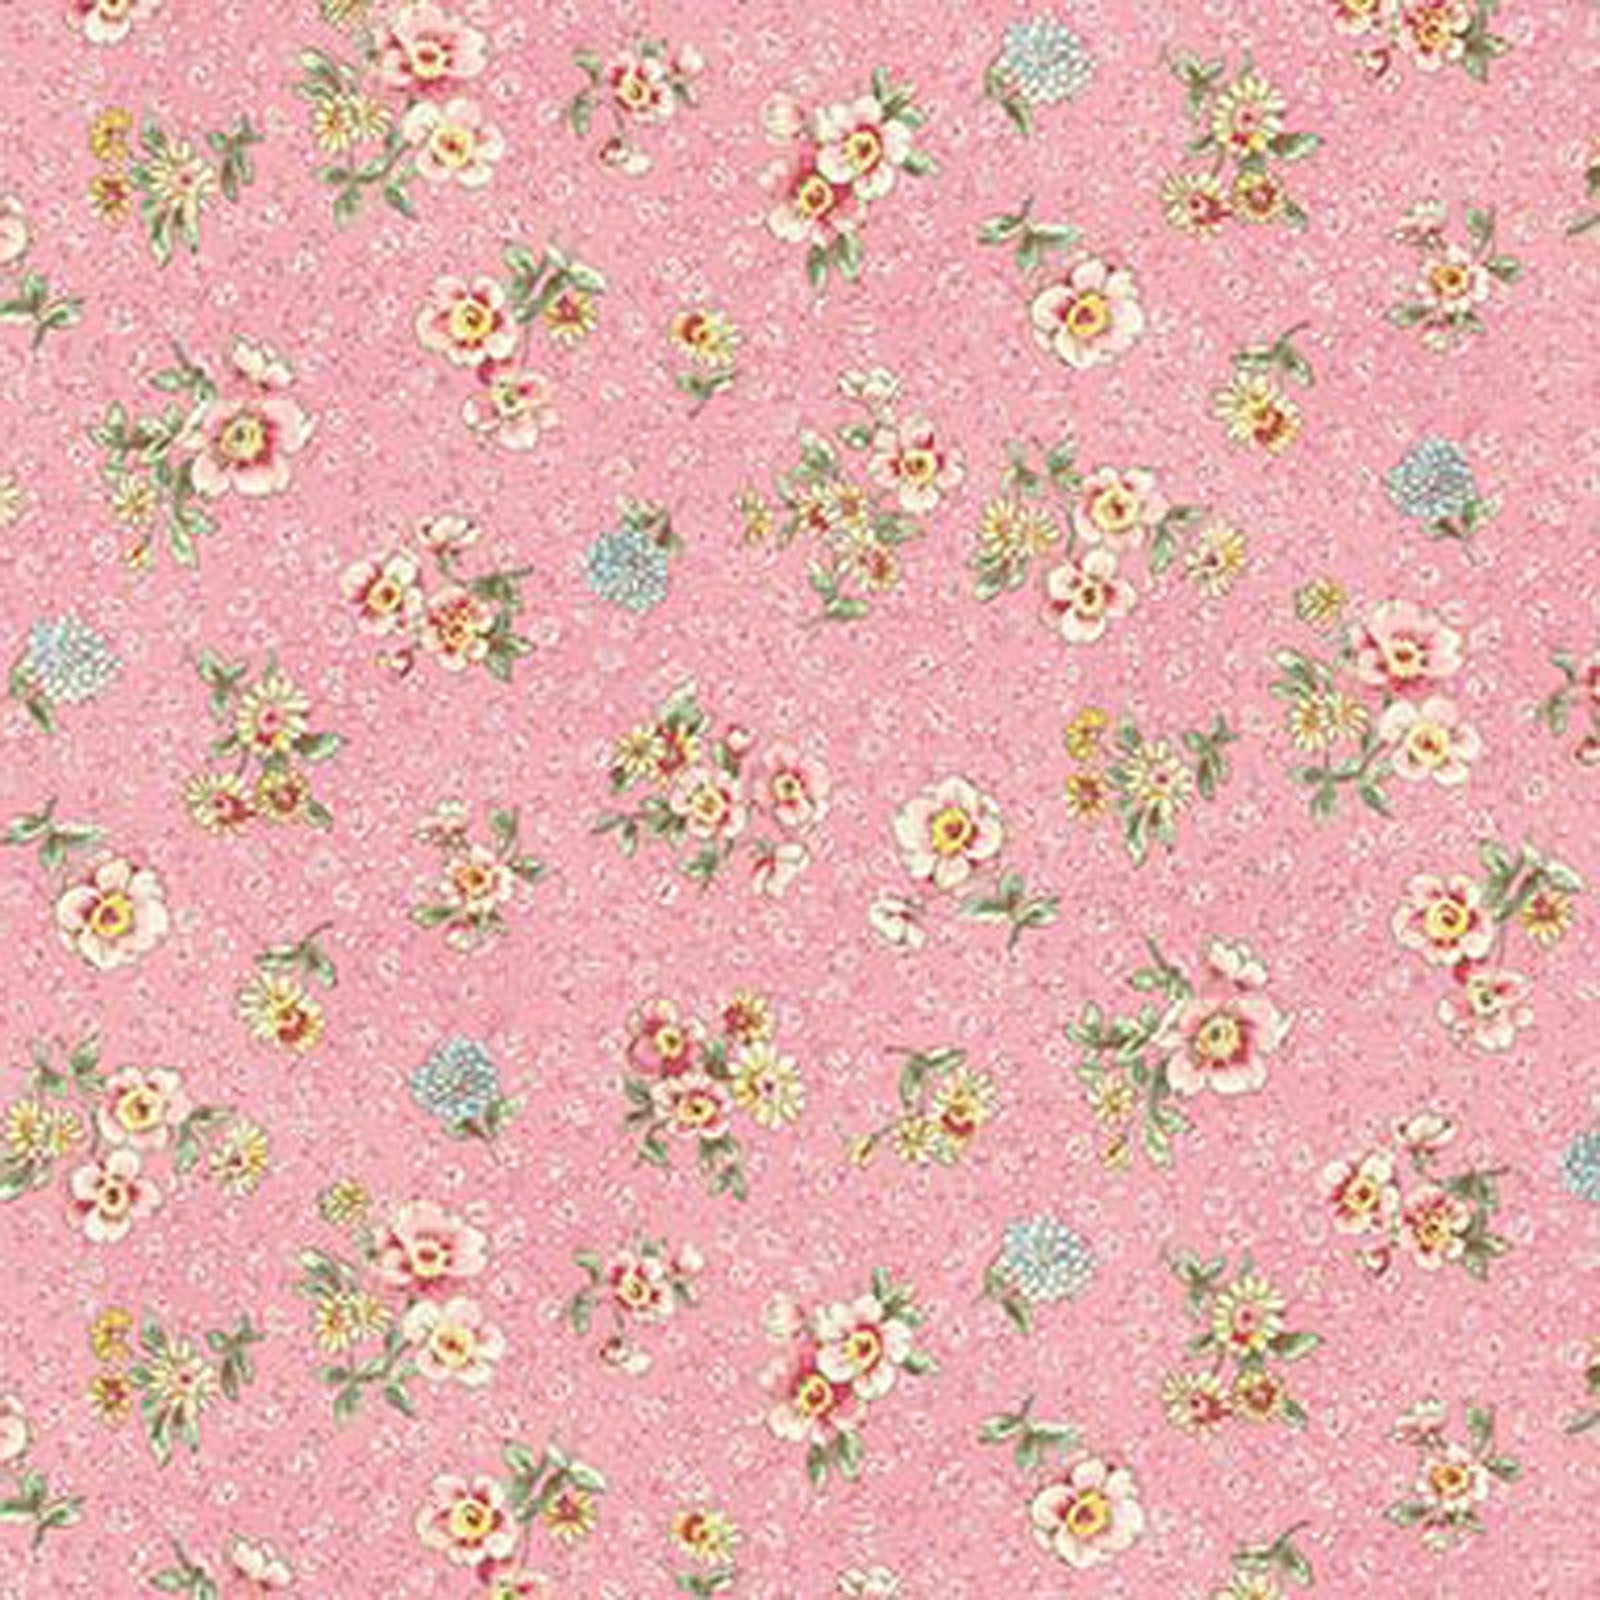 Rose Garden RU2410-14B Vintage Floral on Pink by Quilt Gate